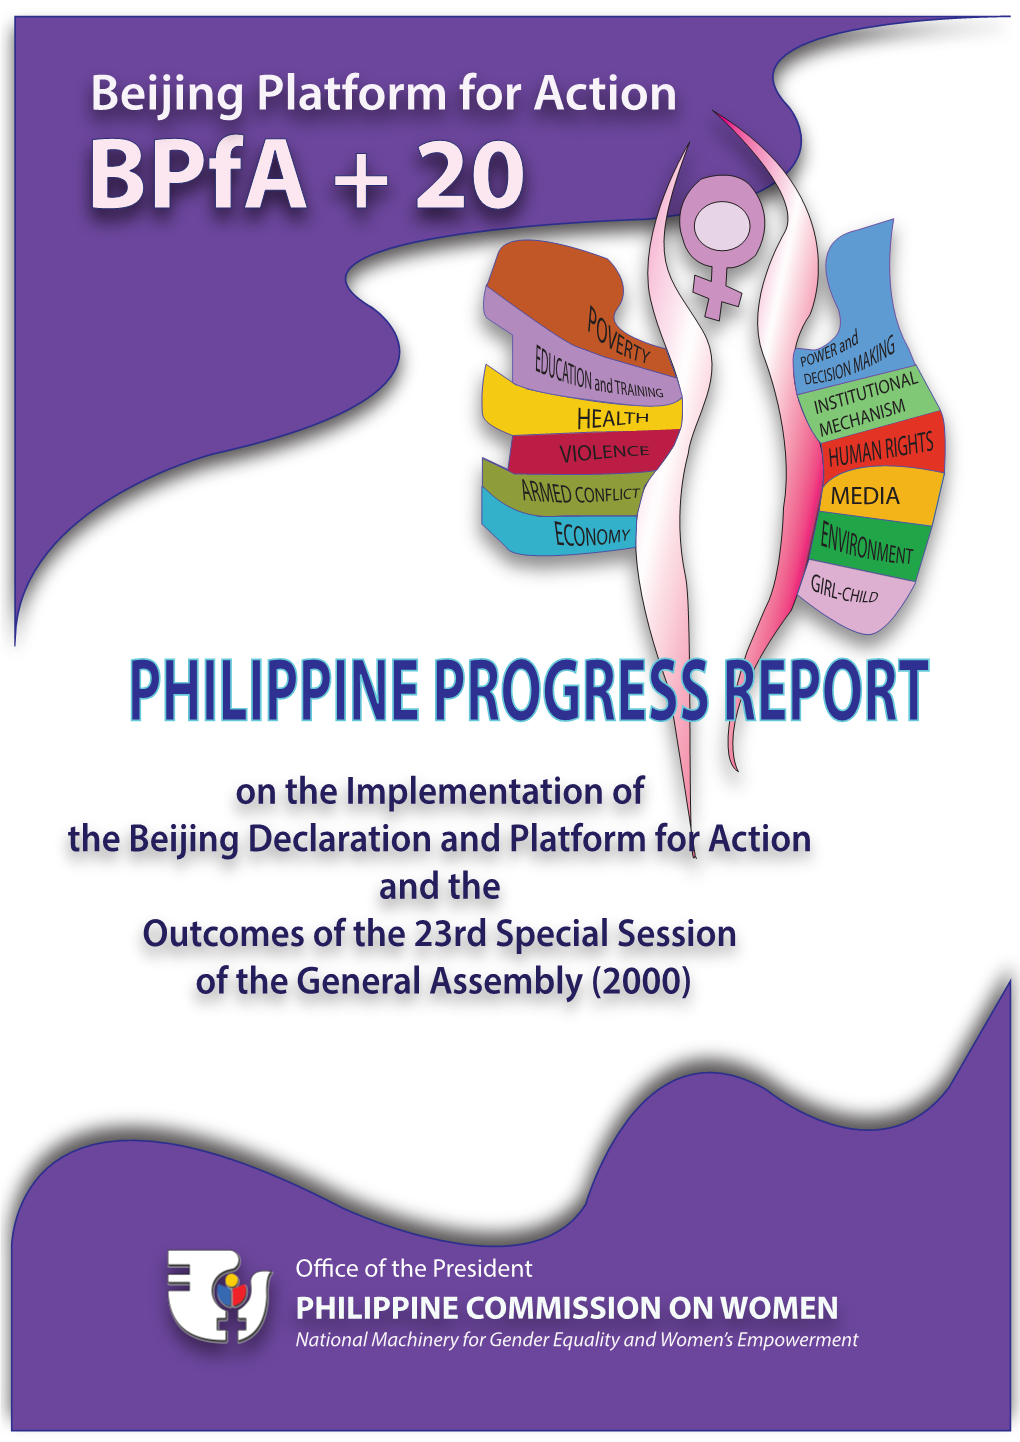 Bpfa + 20 Beijing Platform for Action